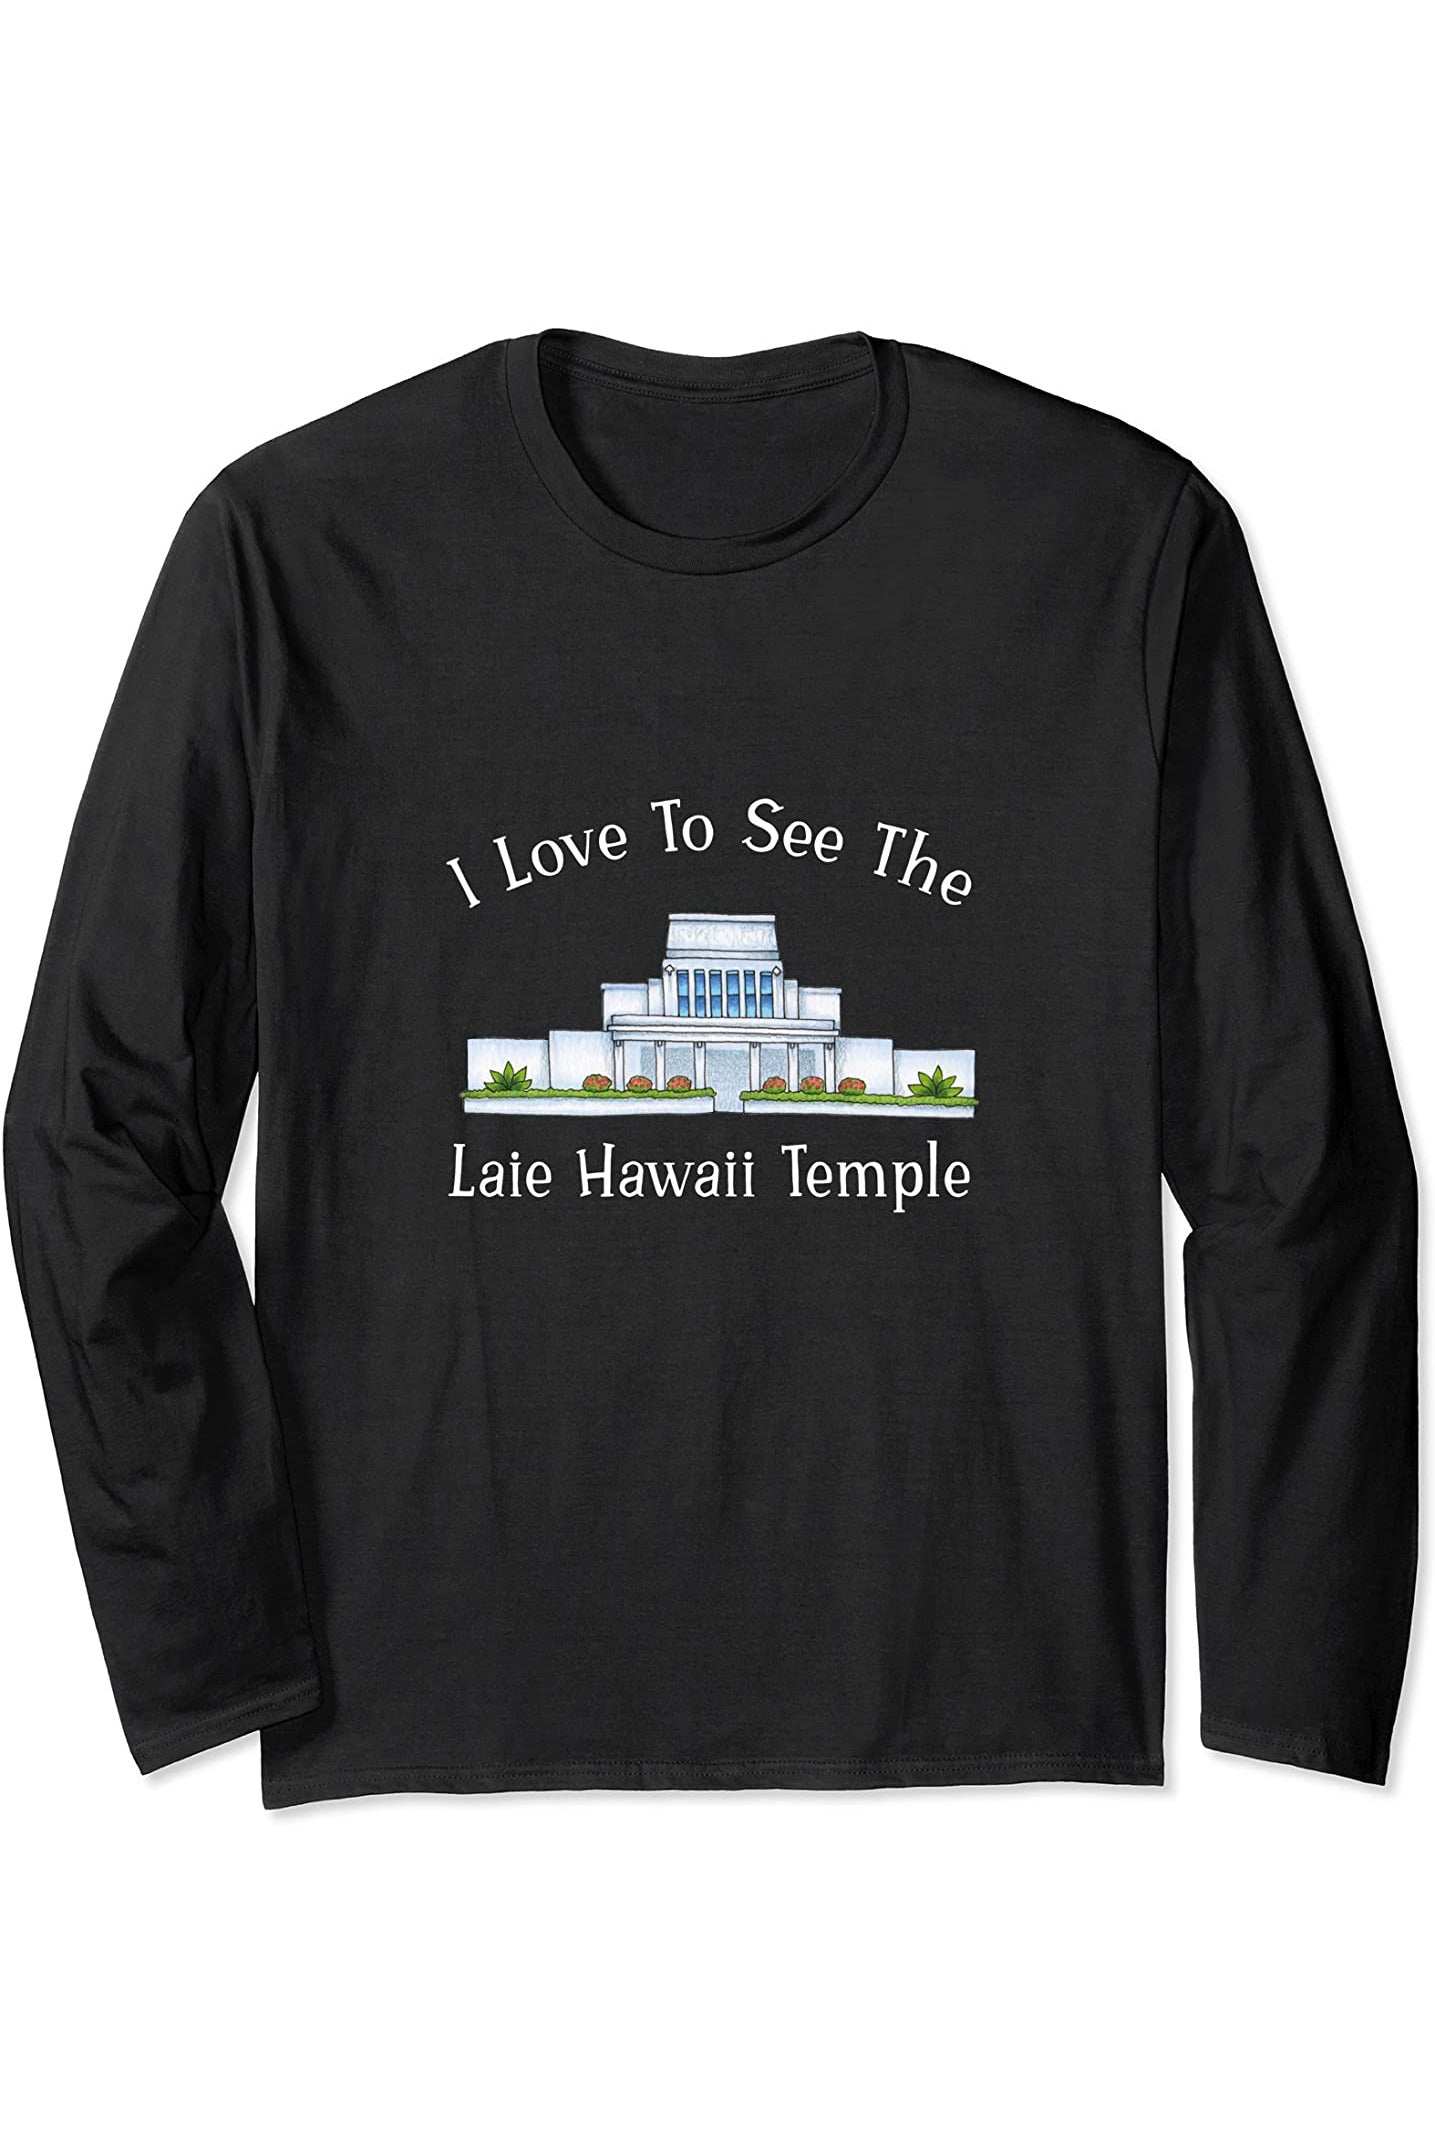 Laie Hawaii Temple Long Sleeve T-Shirt - Happy Style (English) US